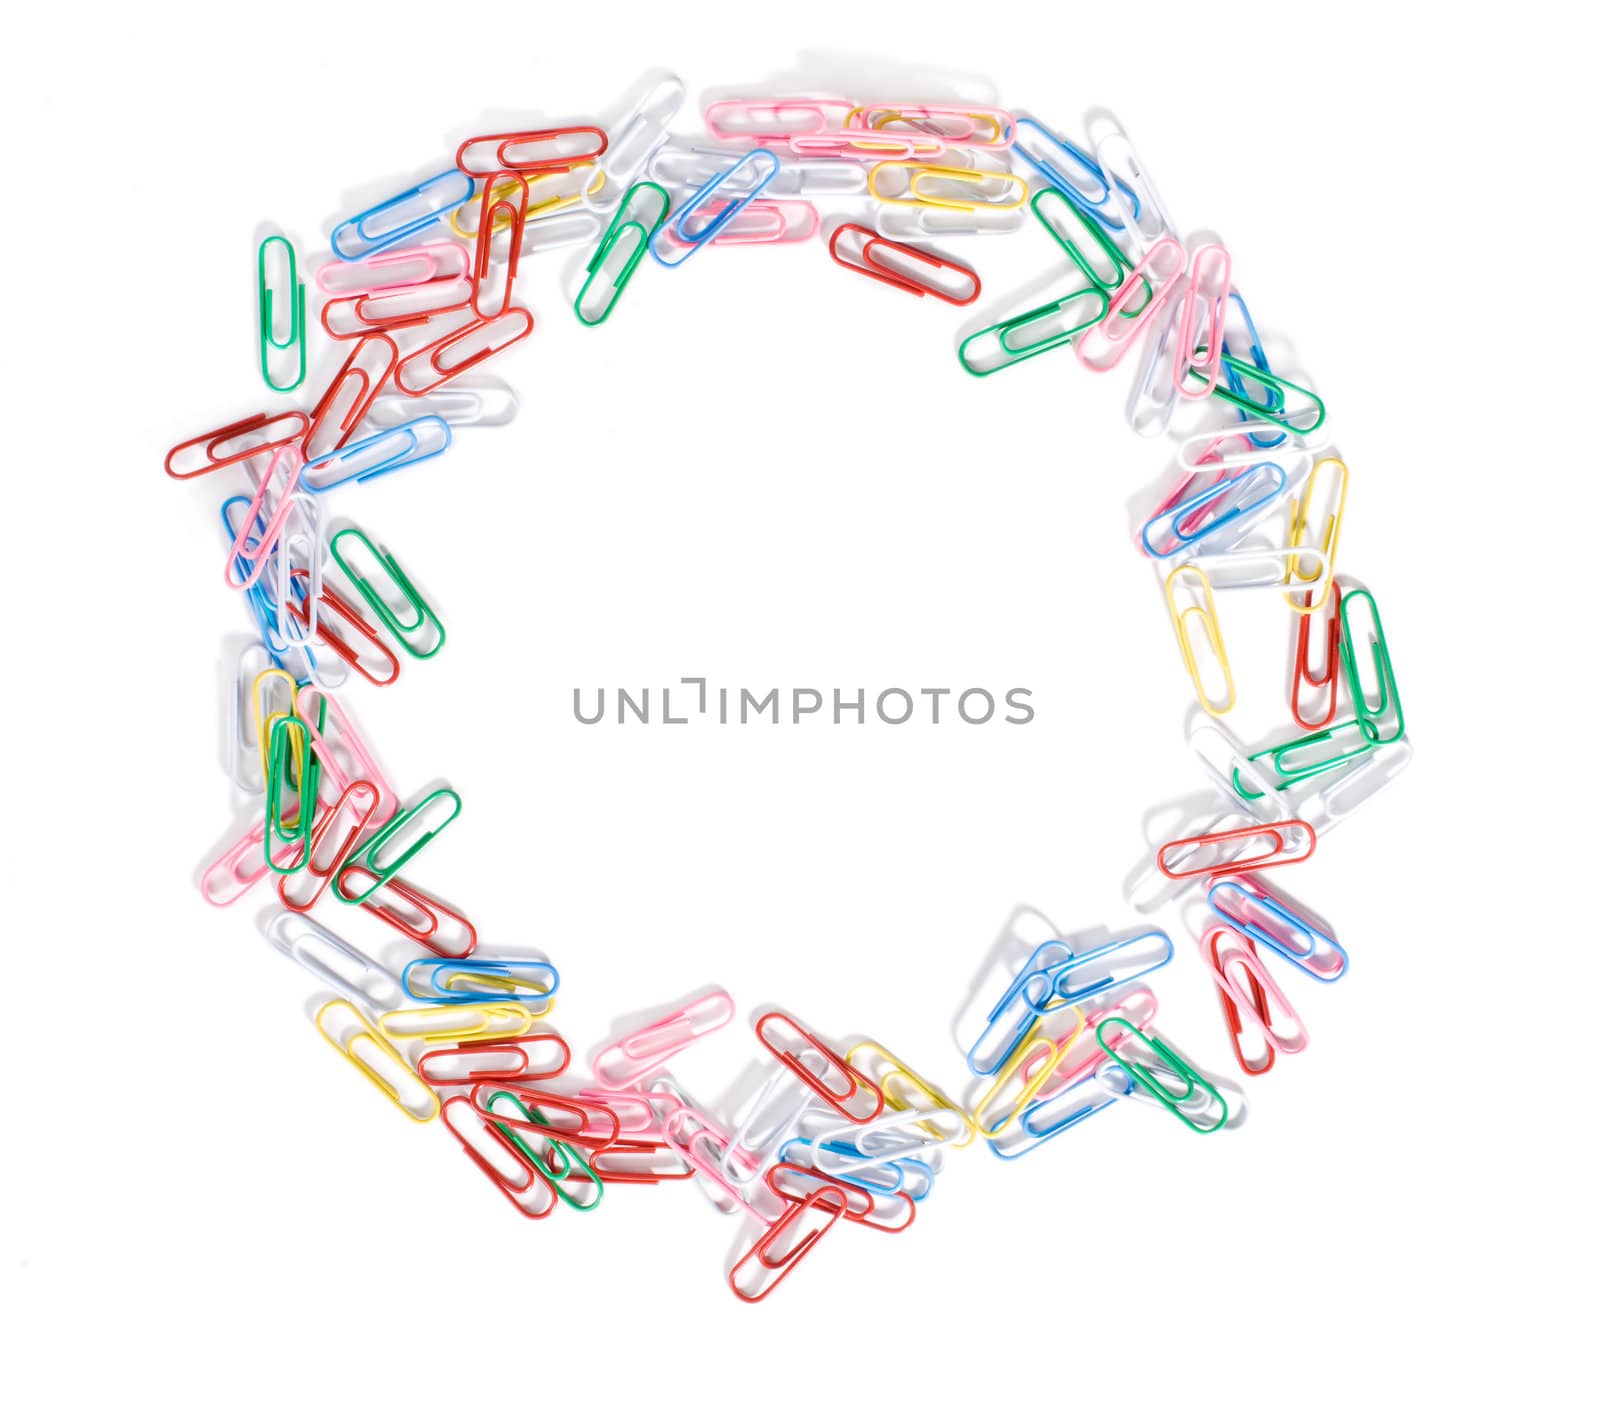 Paper clips ring by rozhenyuk